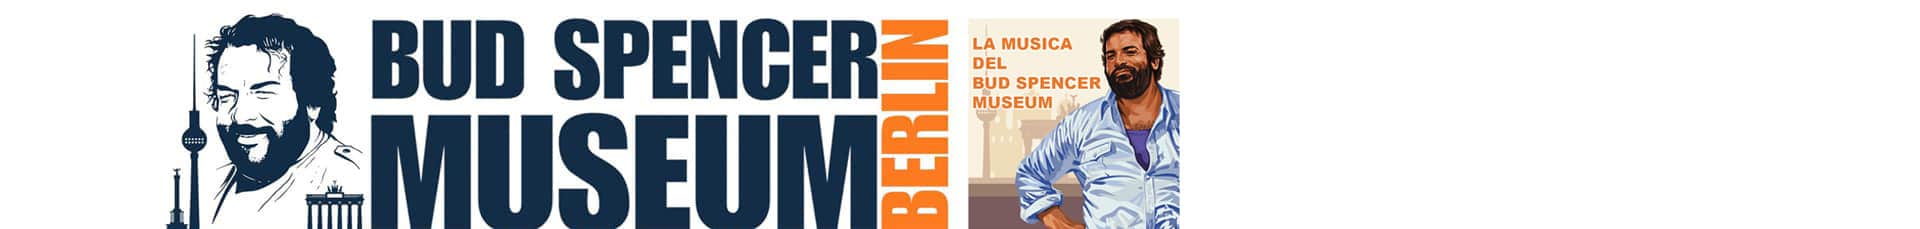 Bud Spencer Museum in Berlin